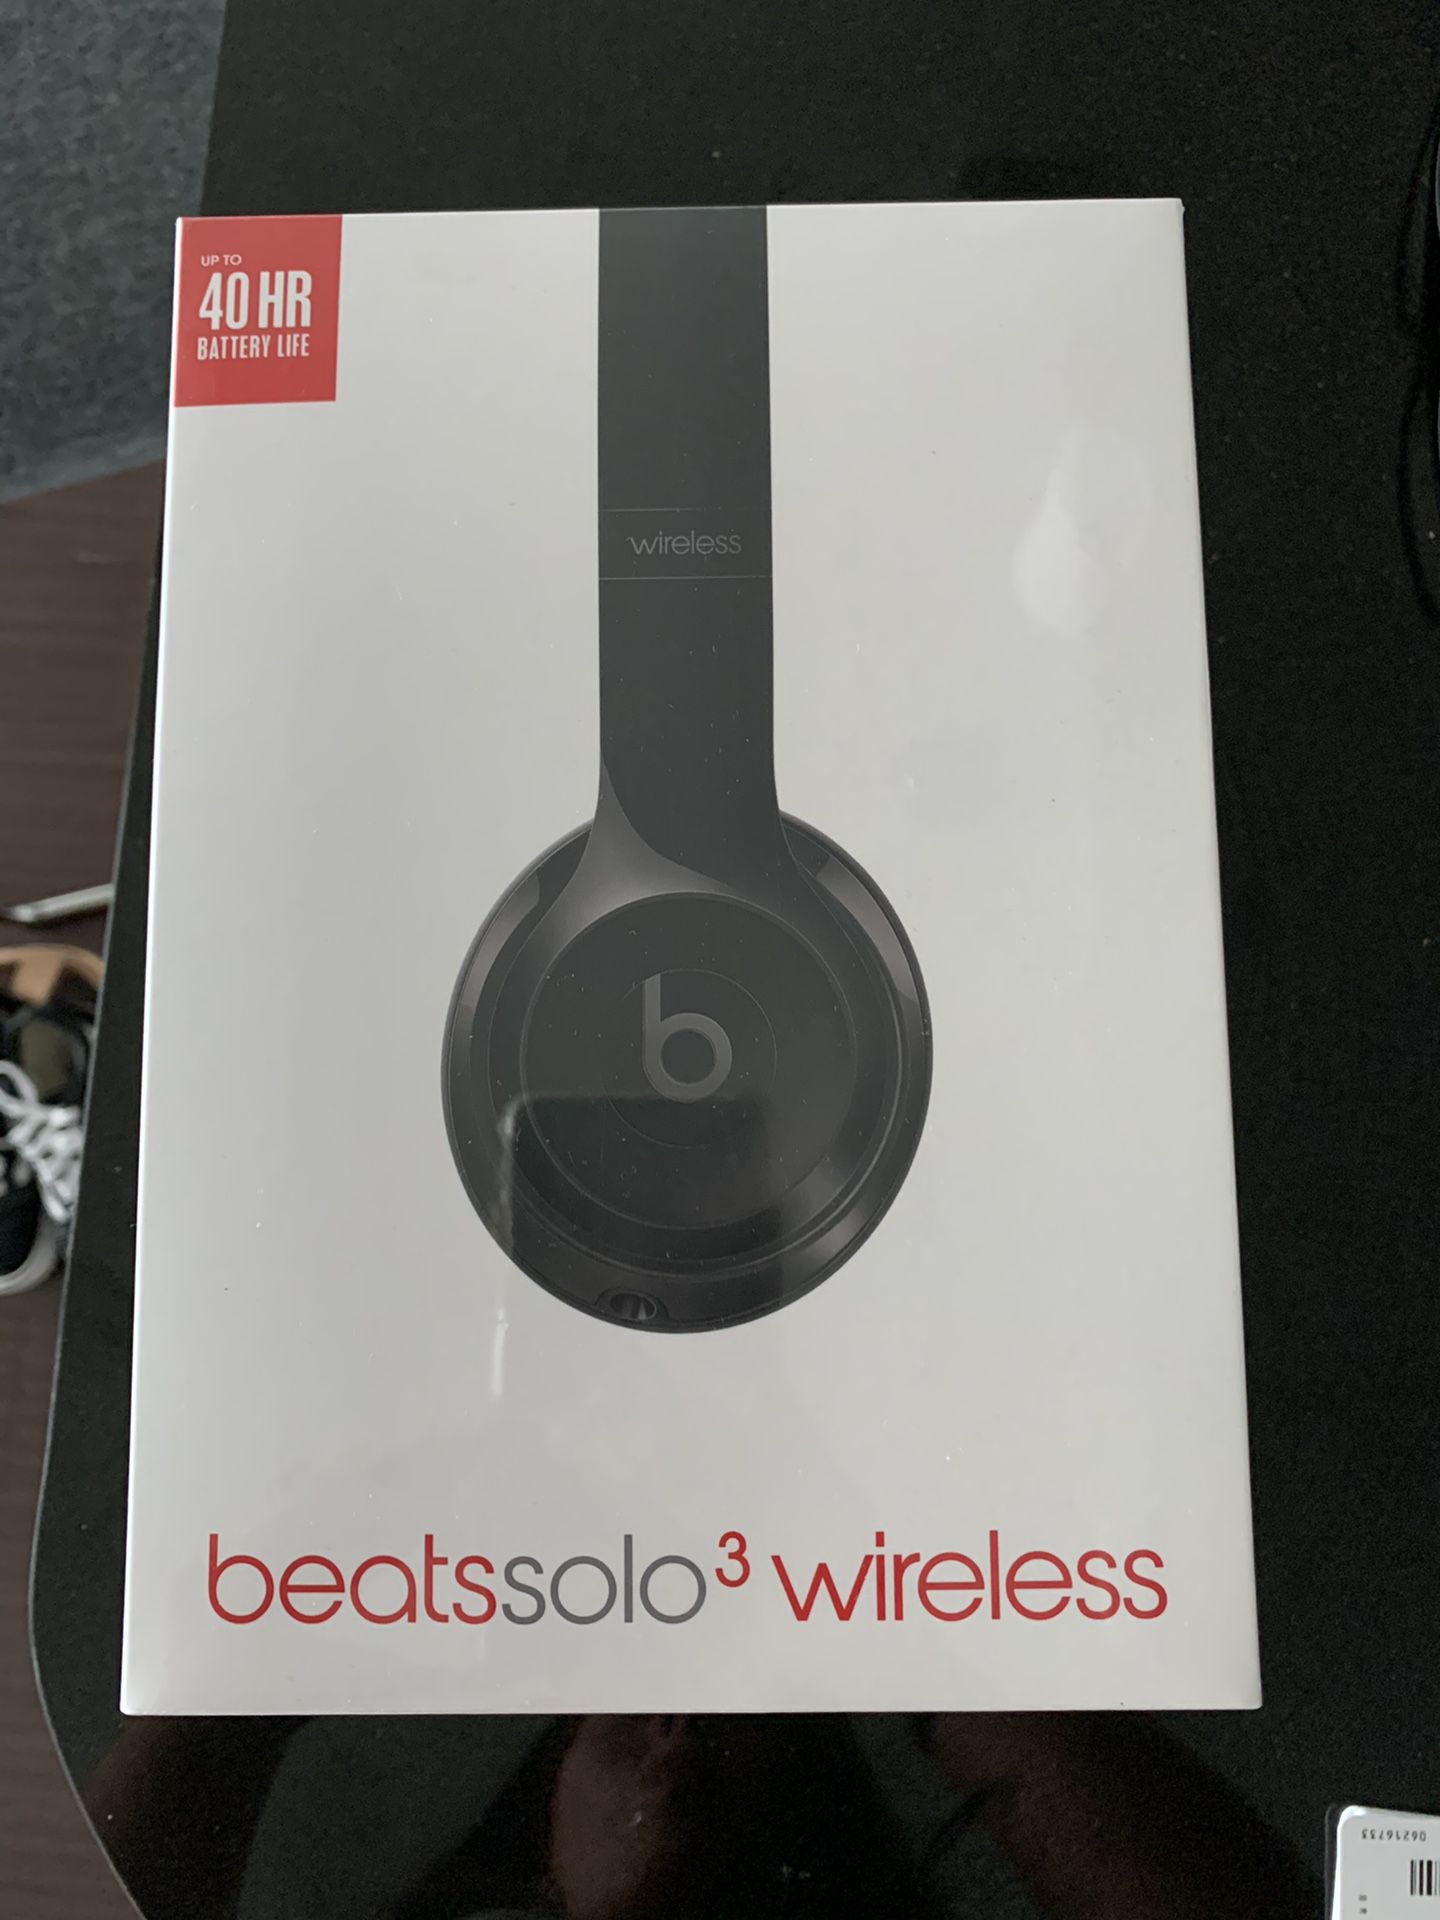 Beats Solo 3 Wireless Headphones